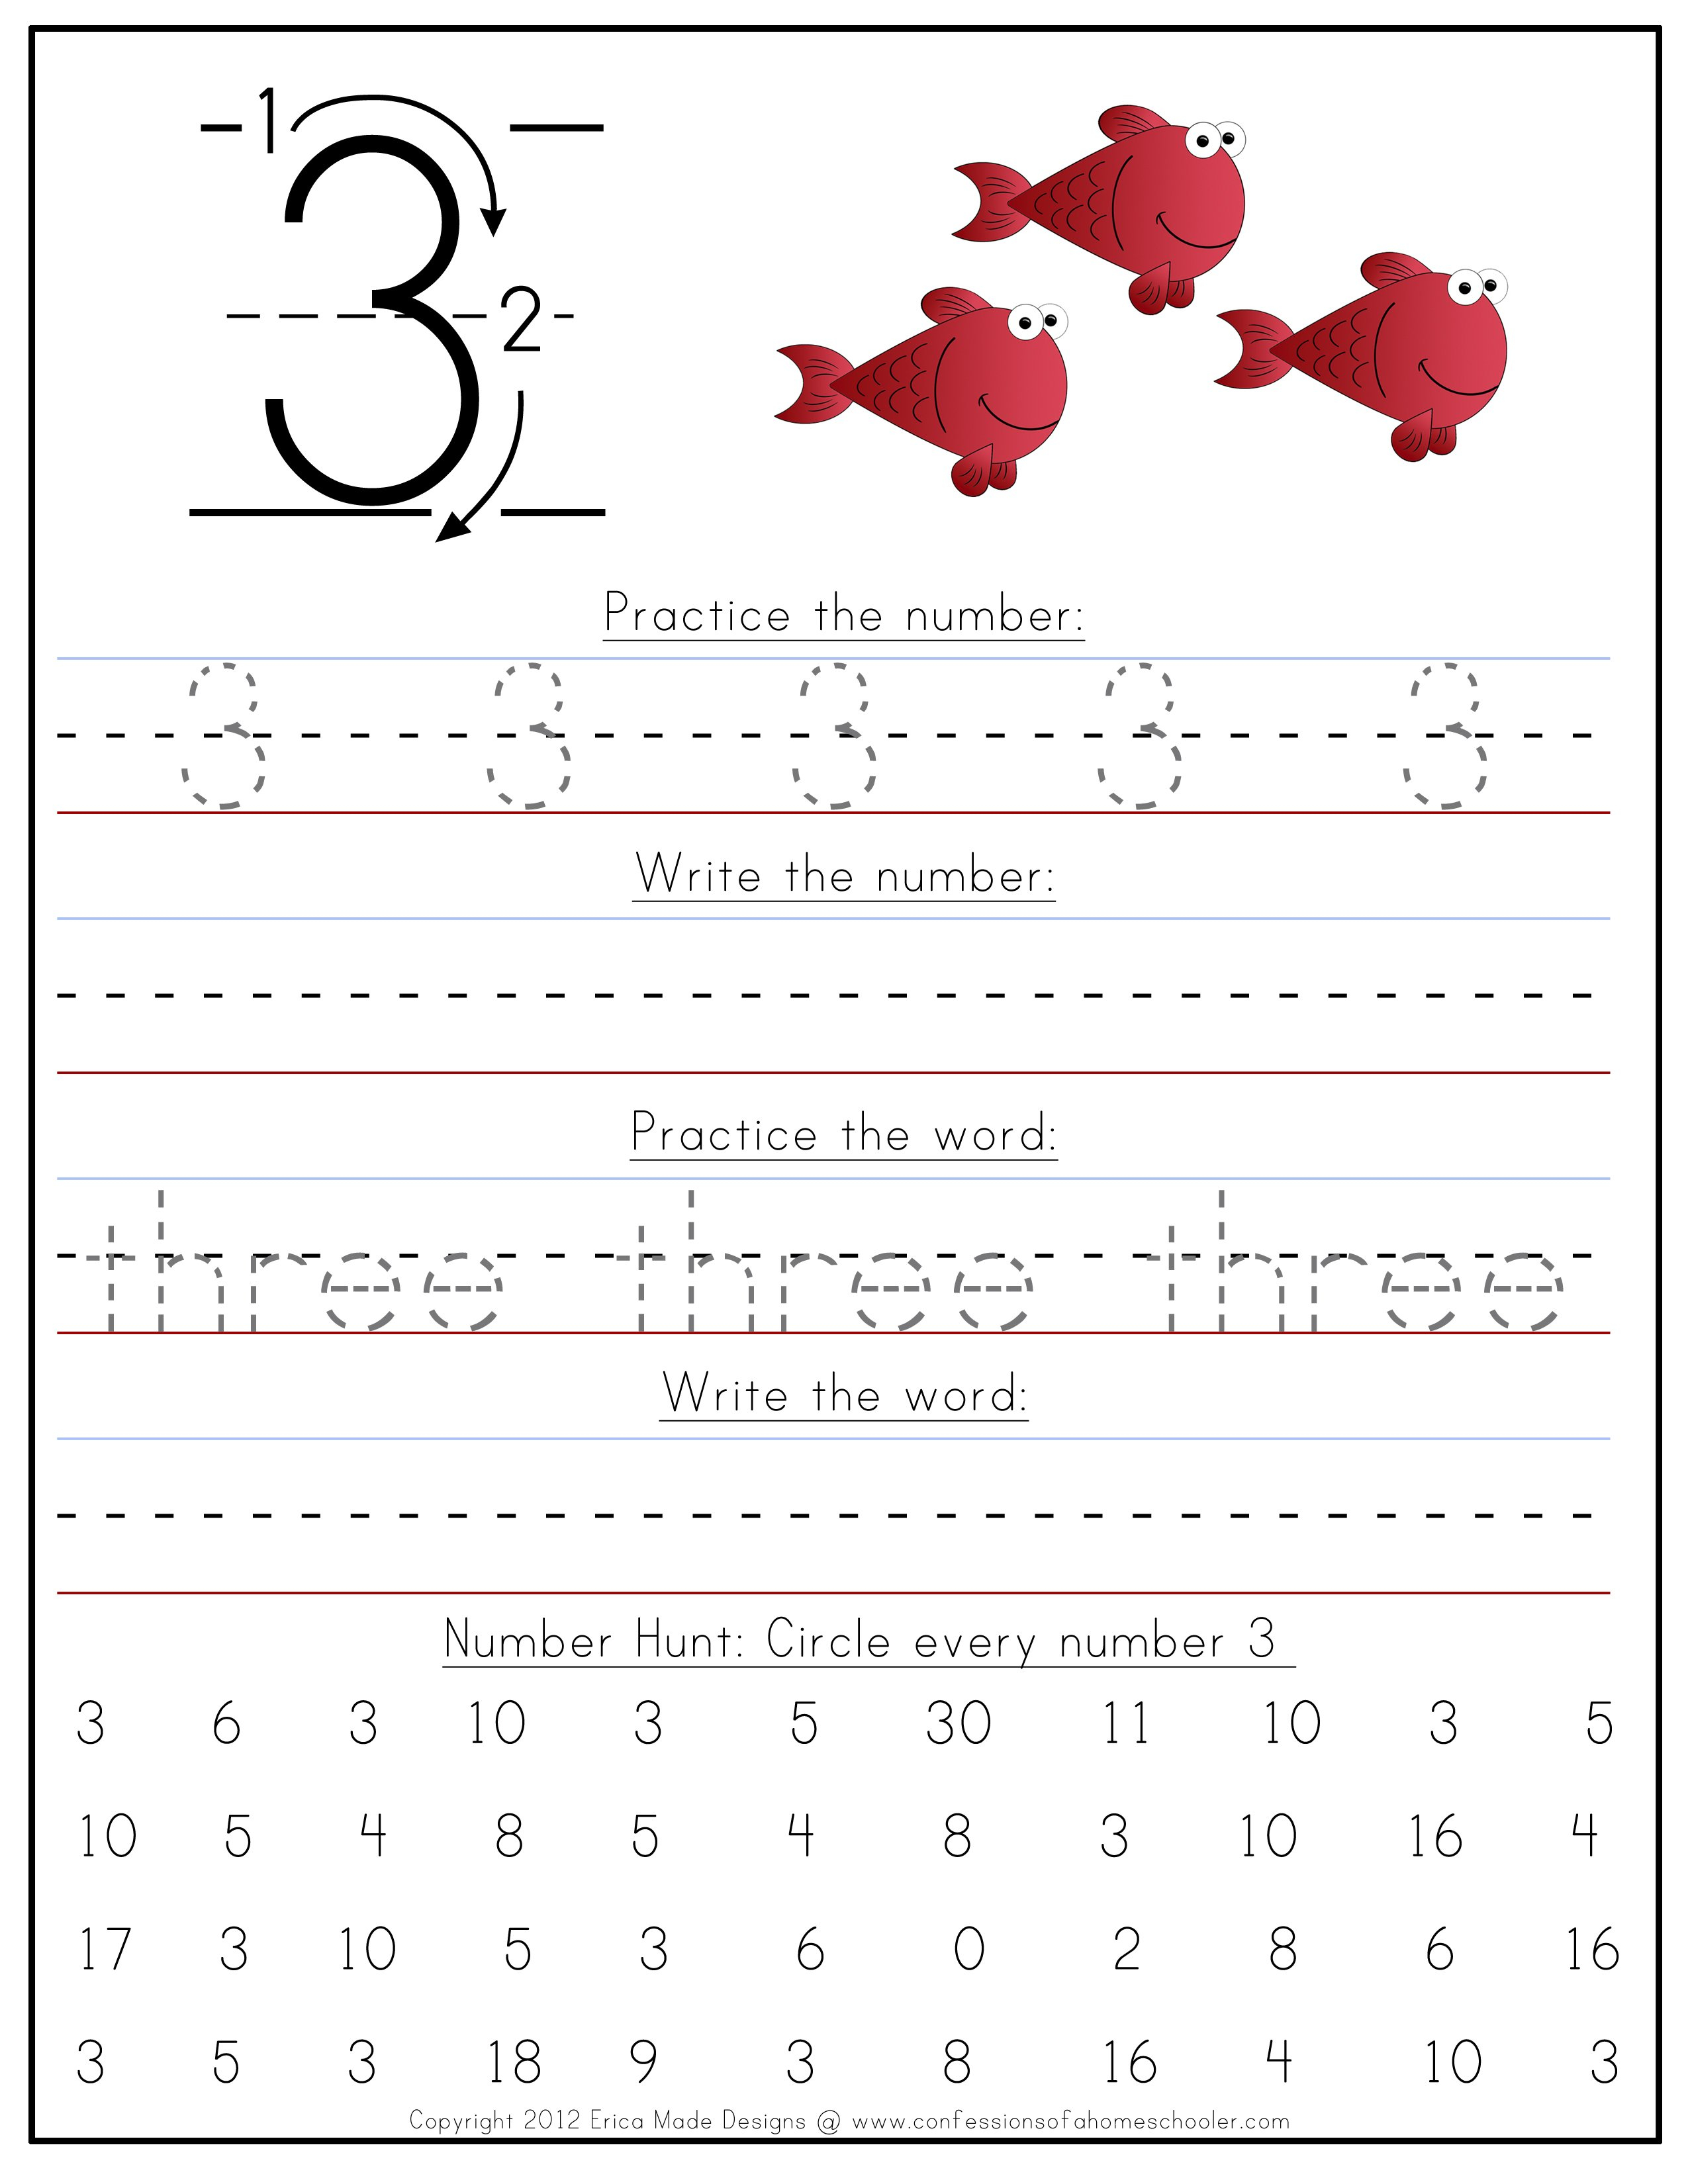 Kindergarten Number Writing Worksheets  Confessions Of A Homeschooler Within Preschool Writing Worksheets